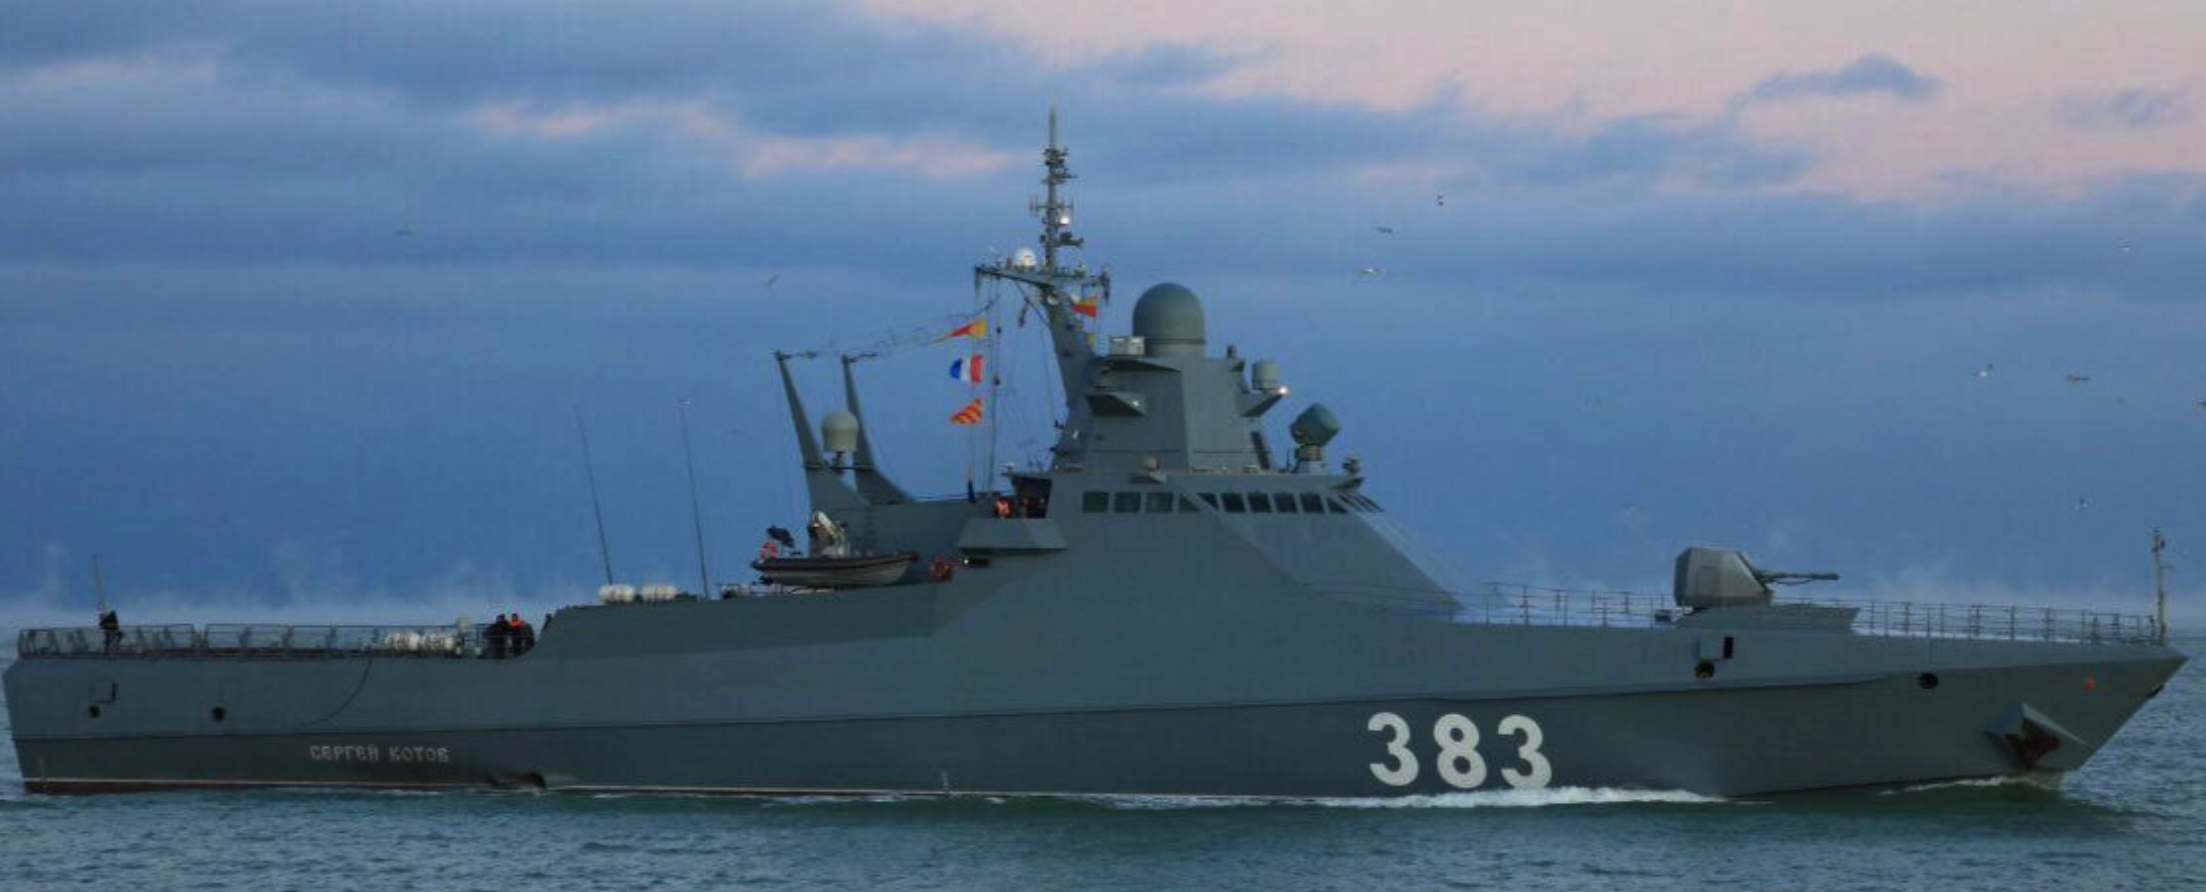 Ukrainian intelligence sinks Russian ‘Sergei Kotov’ warship